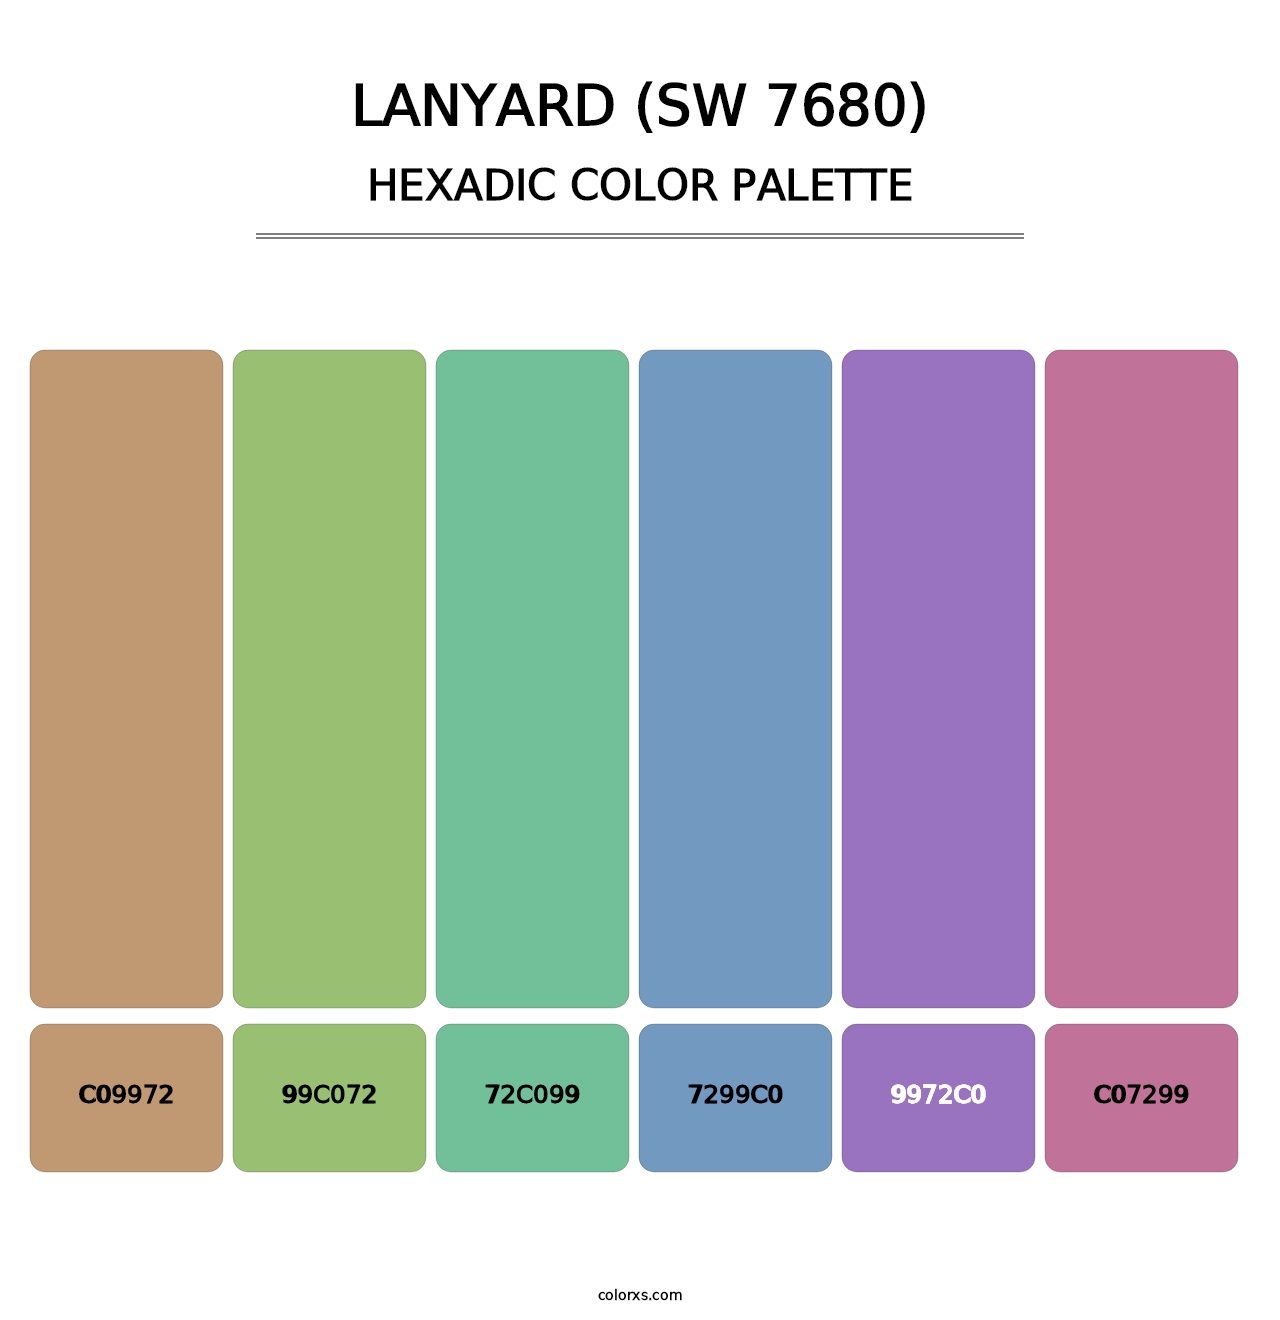 Lanyard (SW 7680) - Hexadic Color Palette